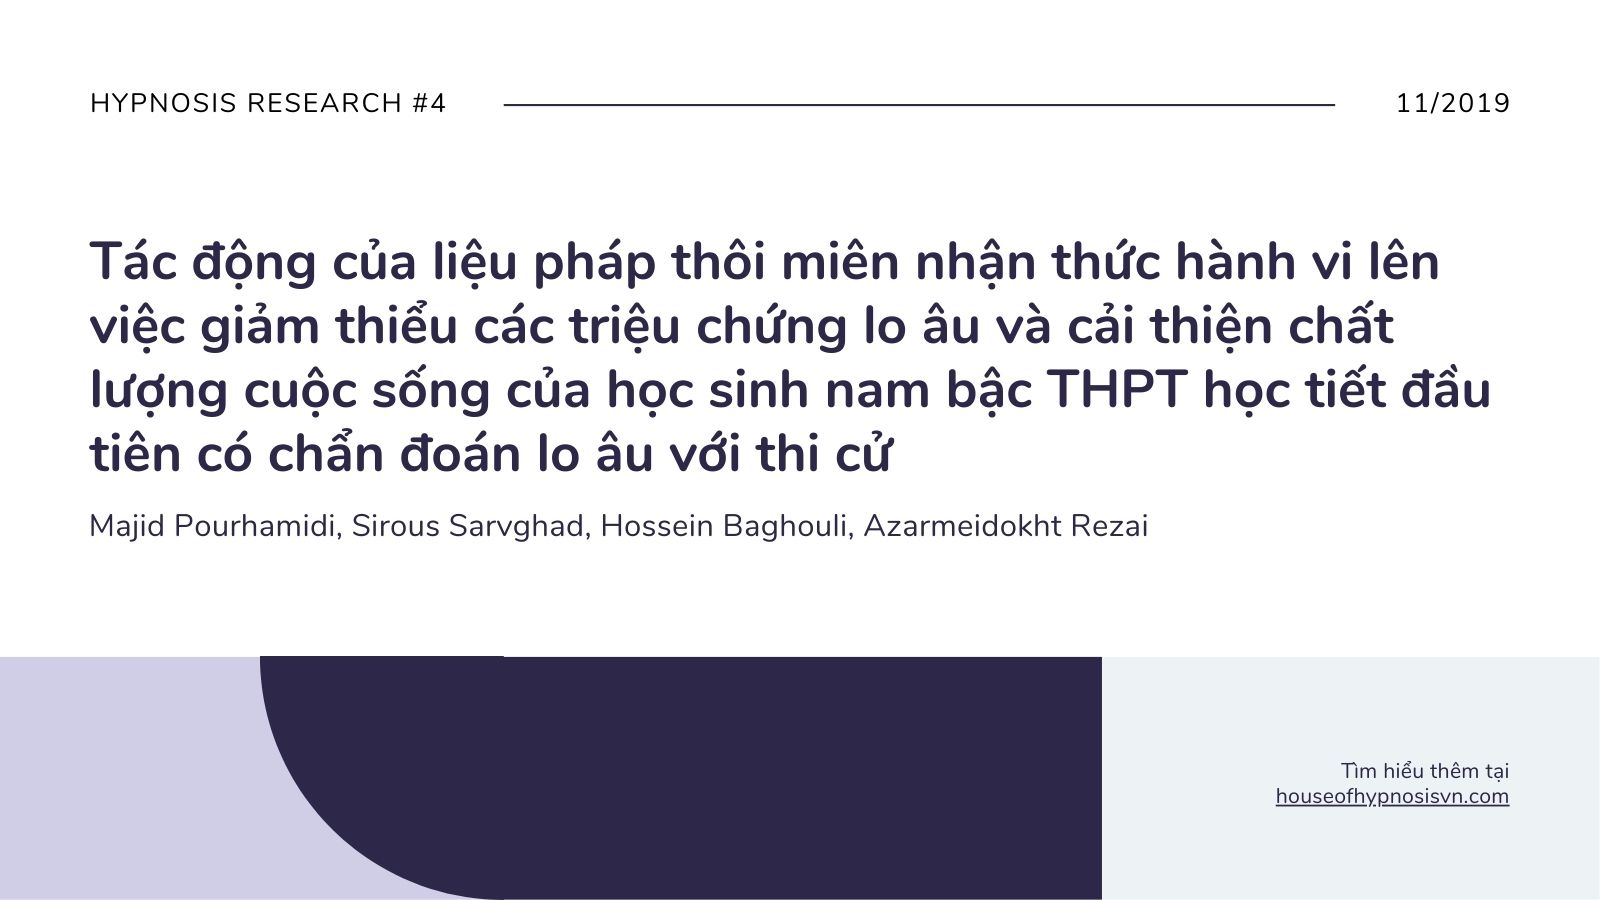 house-of-hypnosis-vietnam-thoi-mien-tri-lieu-research-4